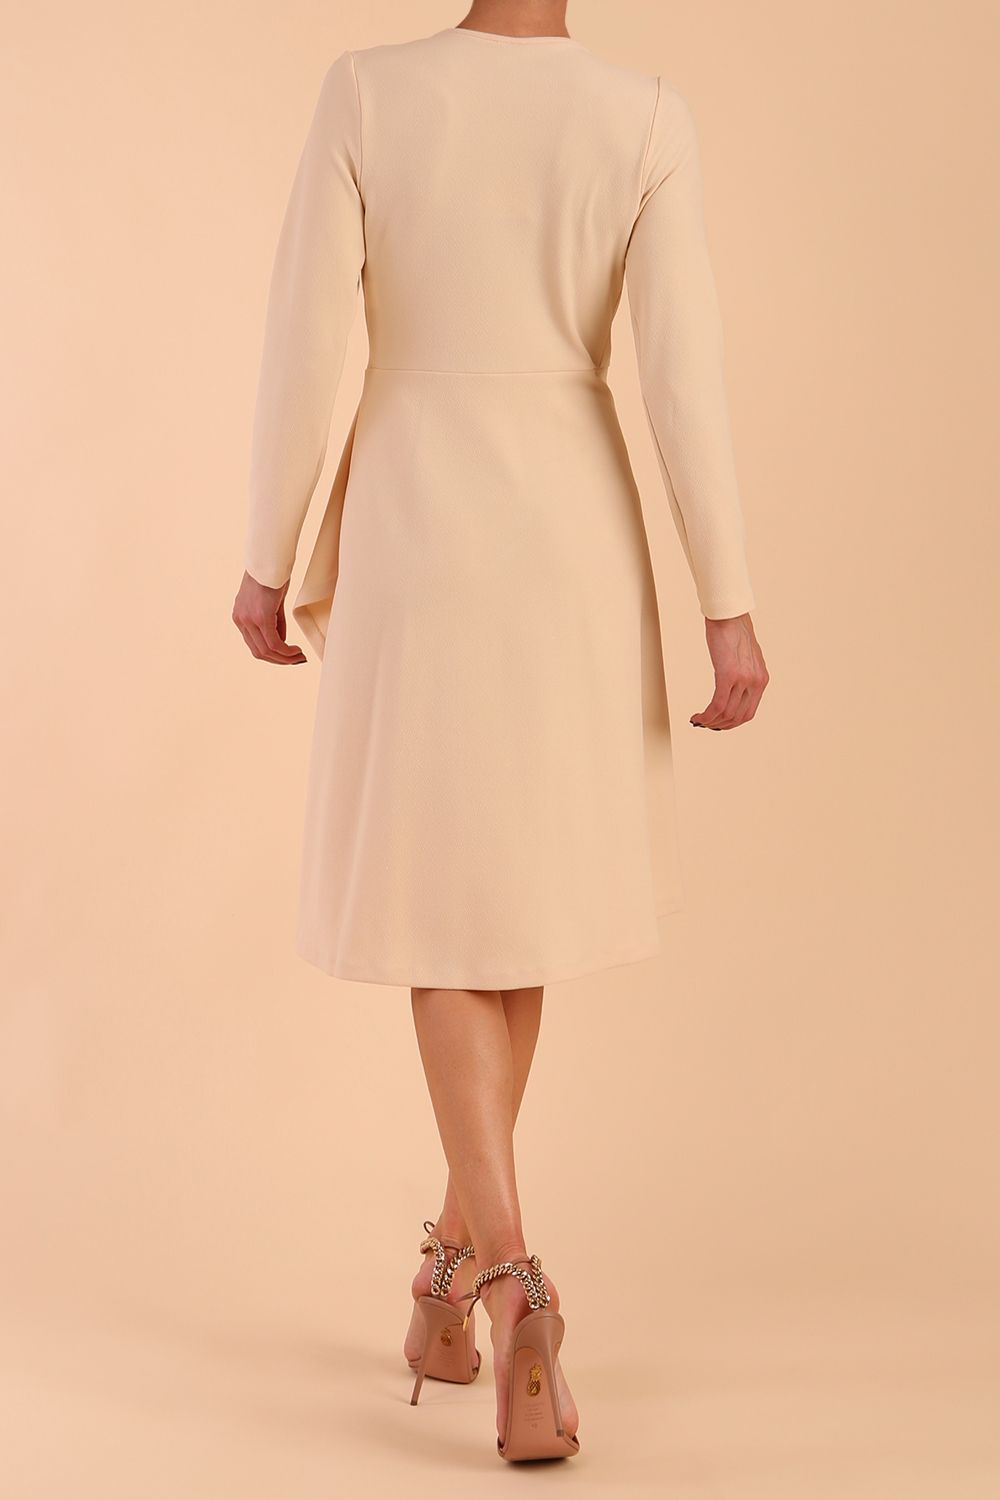 model is wearing diva catwalk moraig swing long sleeve dress with high cowl neckline and wrap skirt in beige back